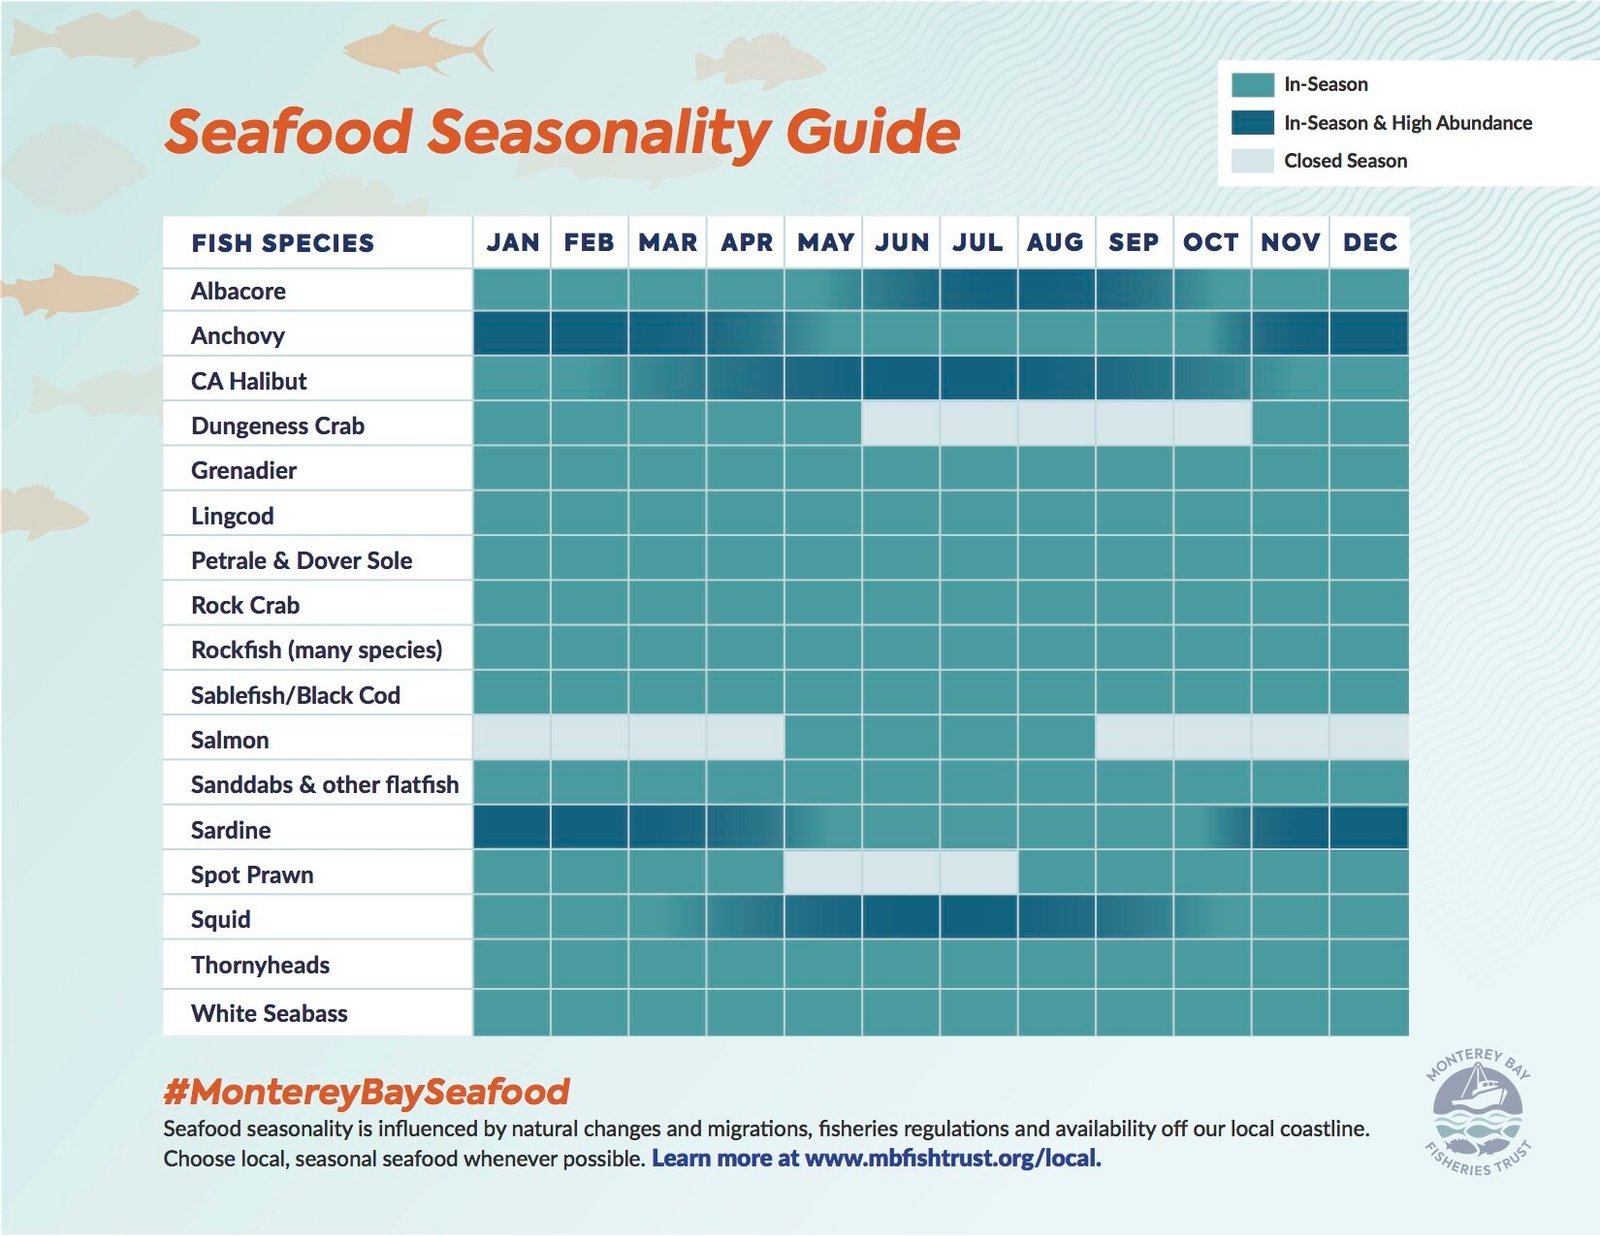 When is Seafood Season